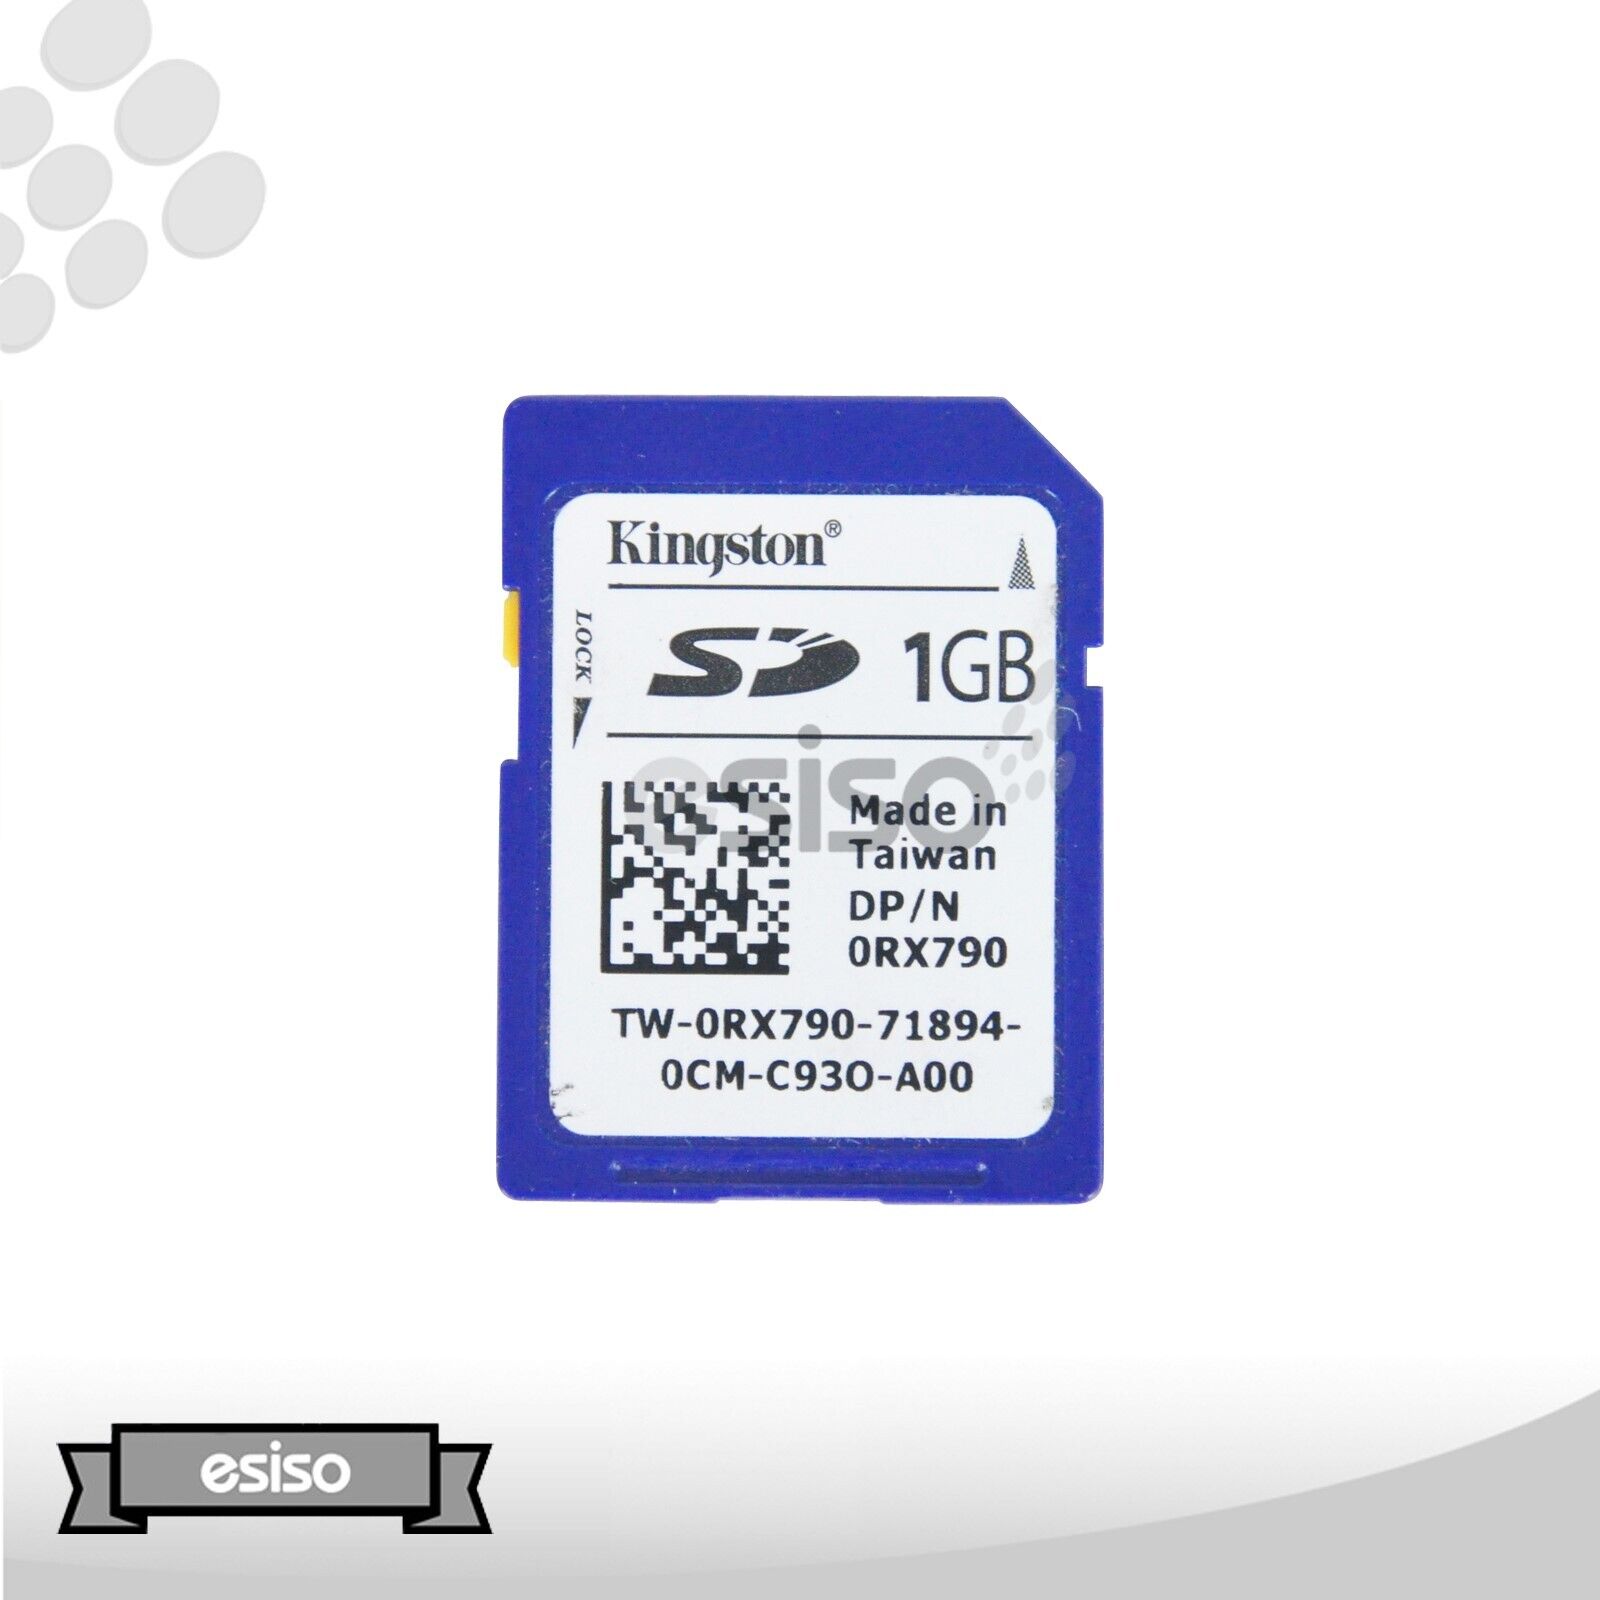 LOT OF 4 RX790 0RX790 DELL 1GB SECURE DIGITAL SD CARD